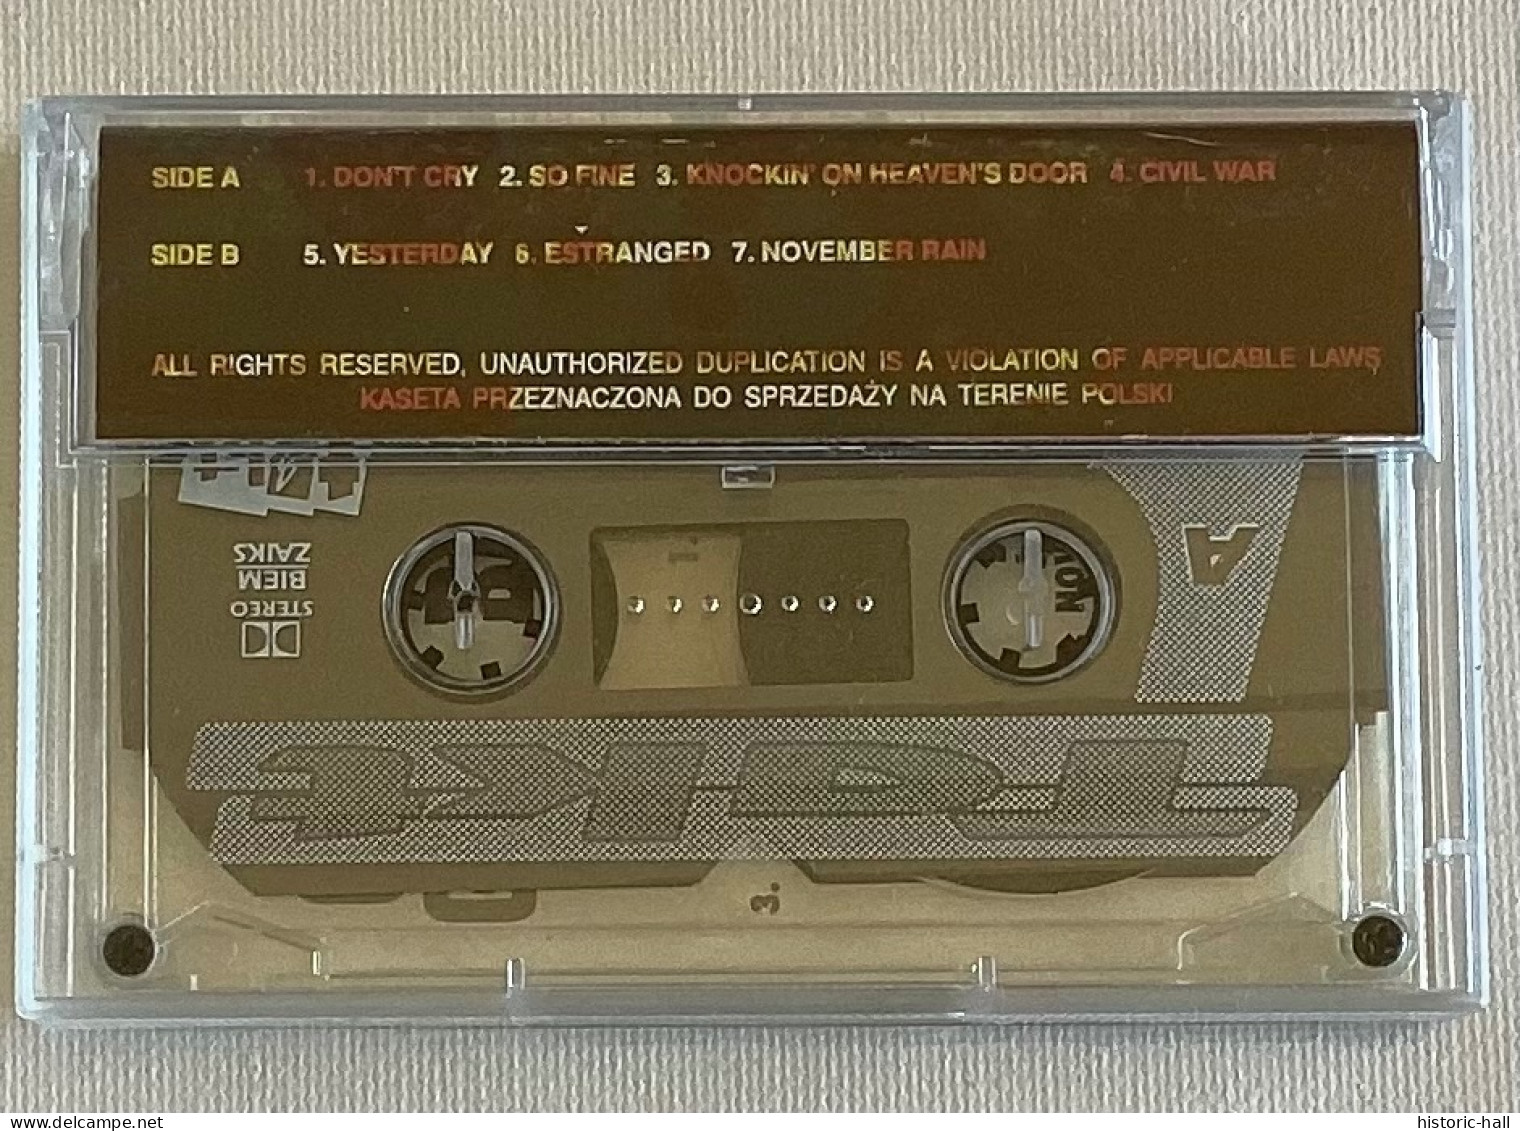 GUNS’ N’ ROSES - Gold Ballads - TAPE - 1990 - Poland Press - Cassettes Audio